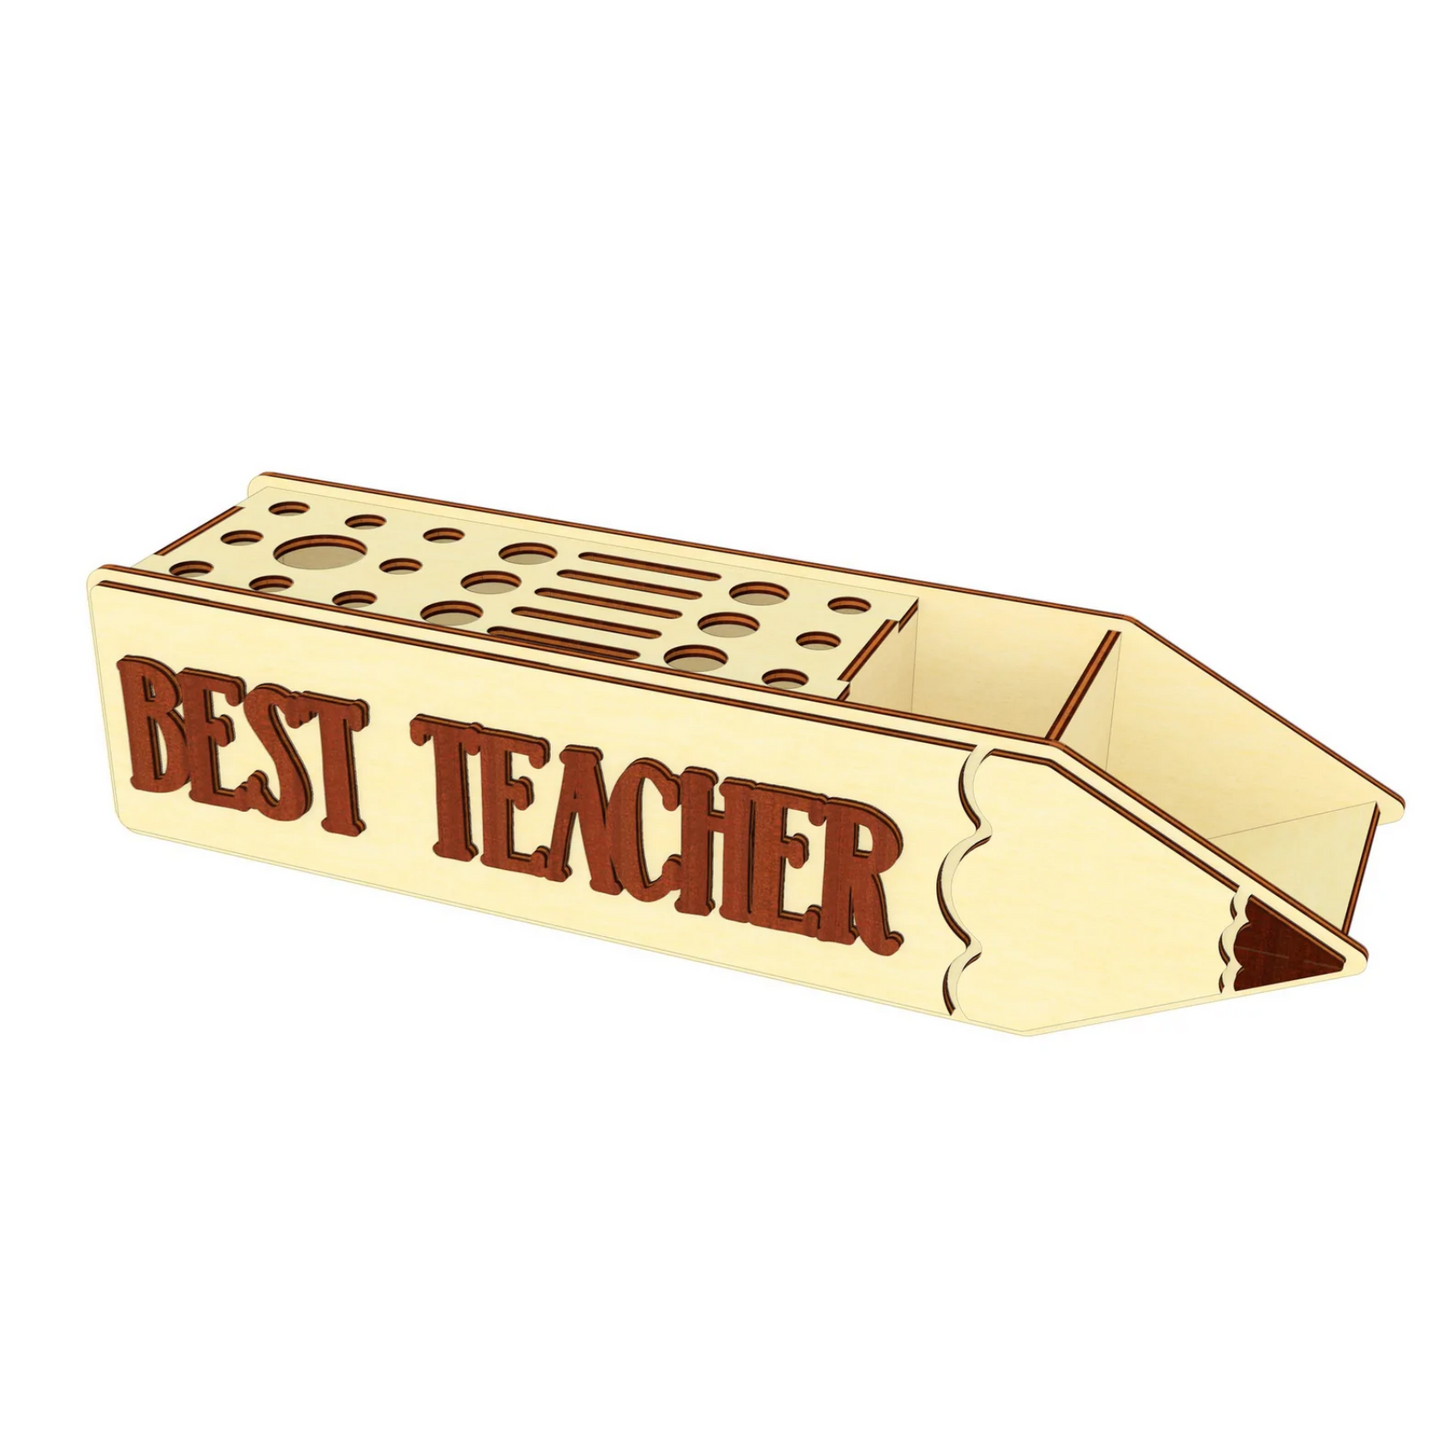 Teacher Pencil Holder